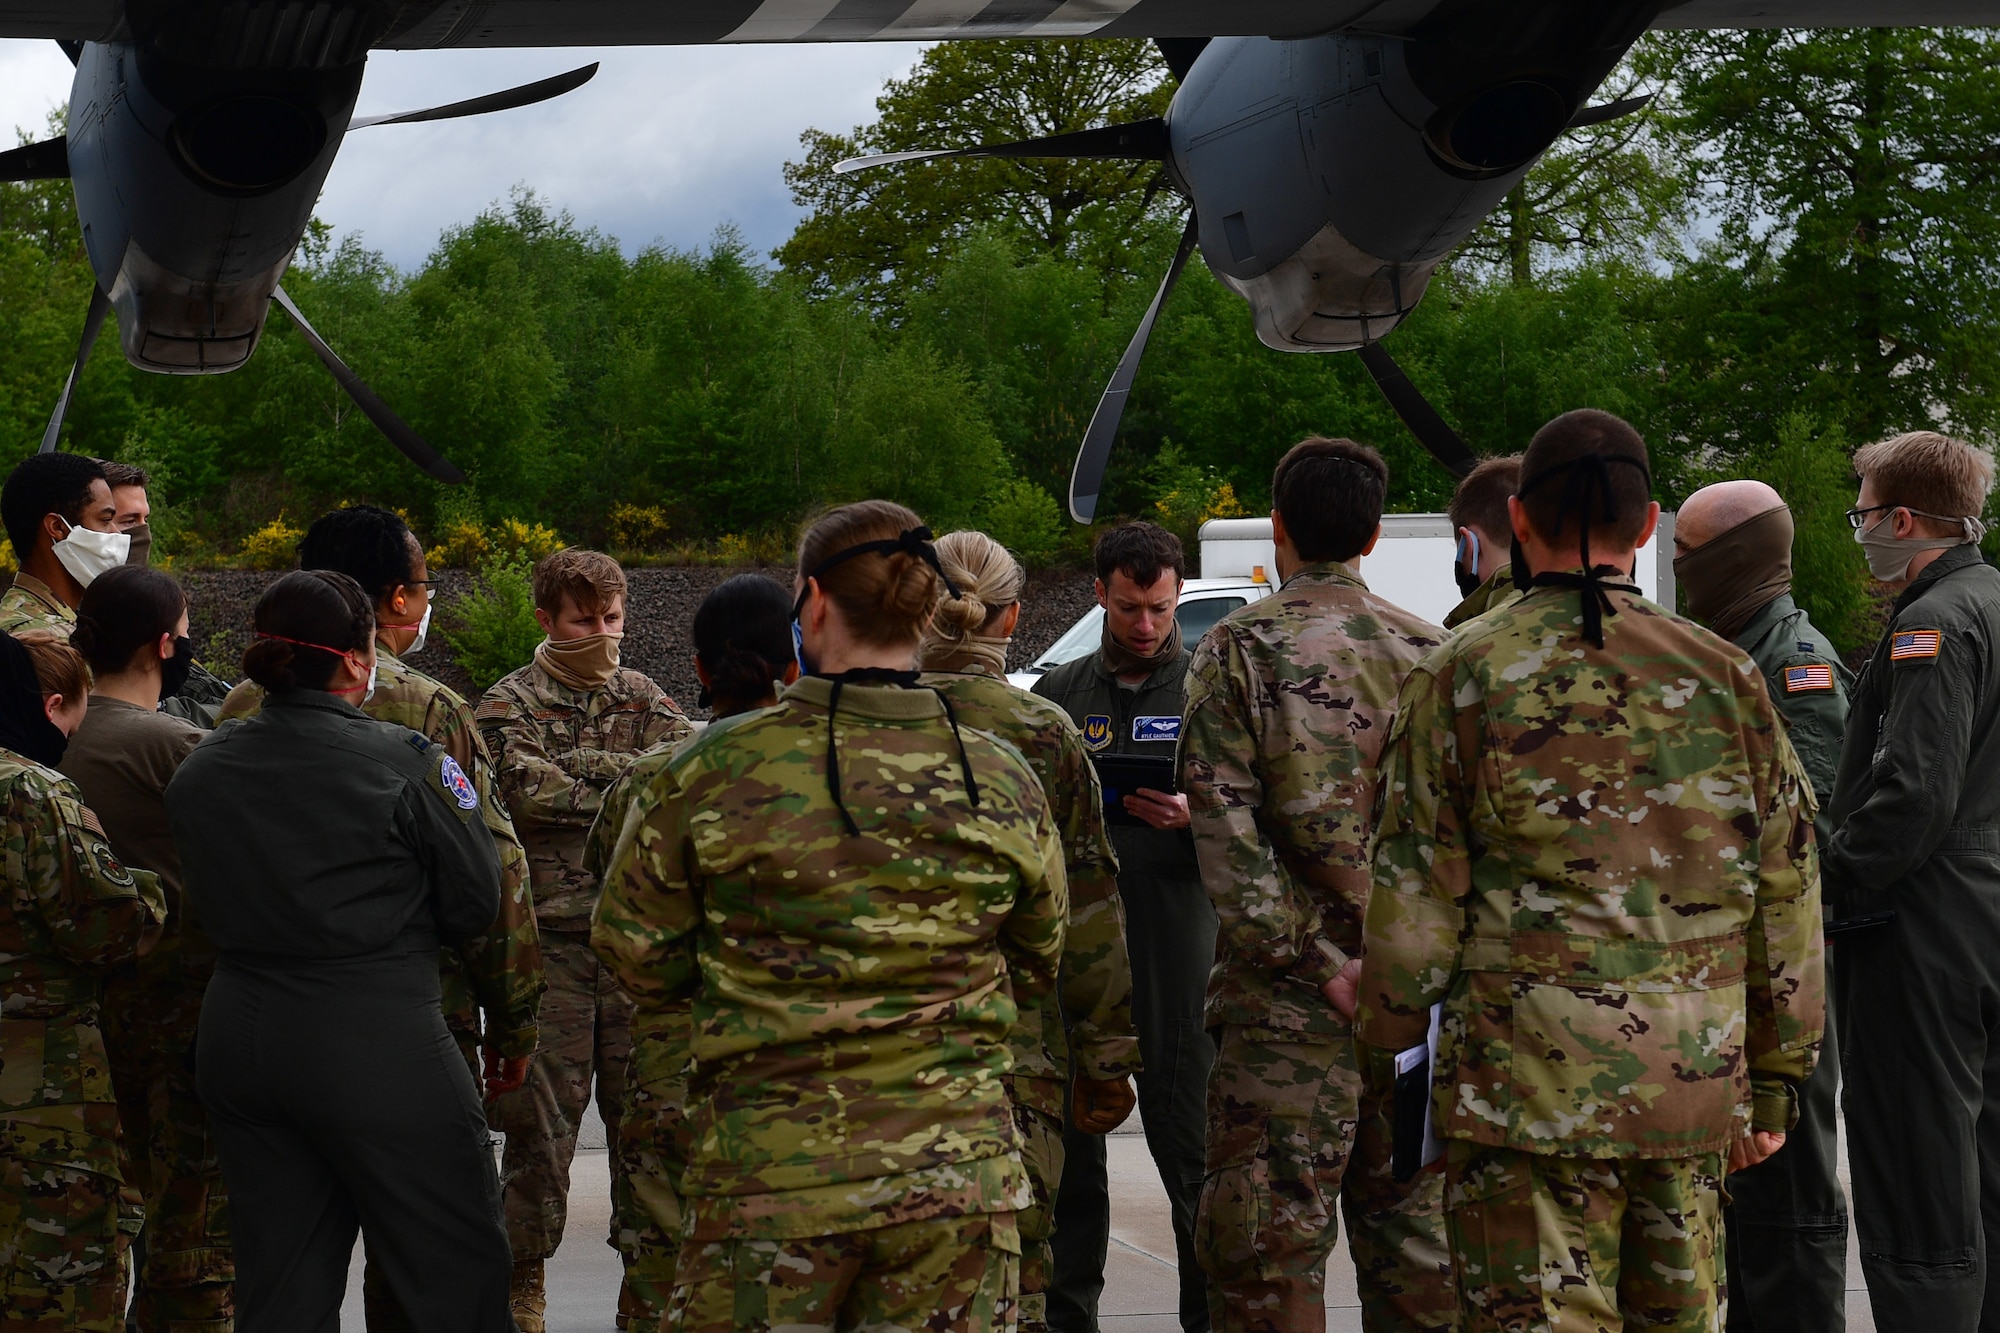 An Airman briefs a group of Airmen.